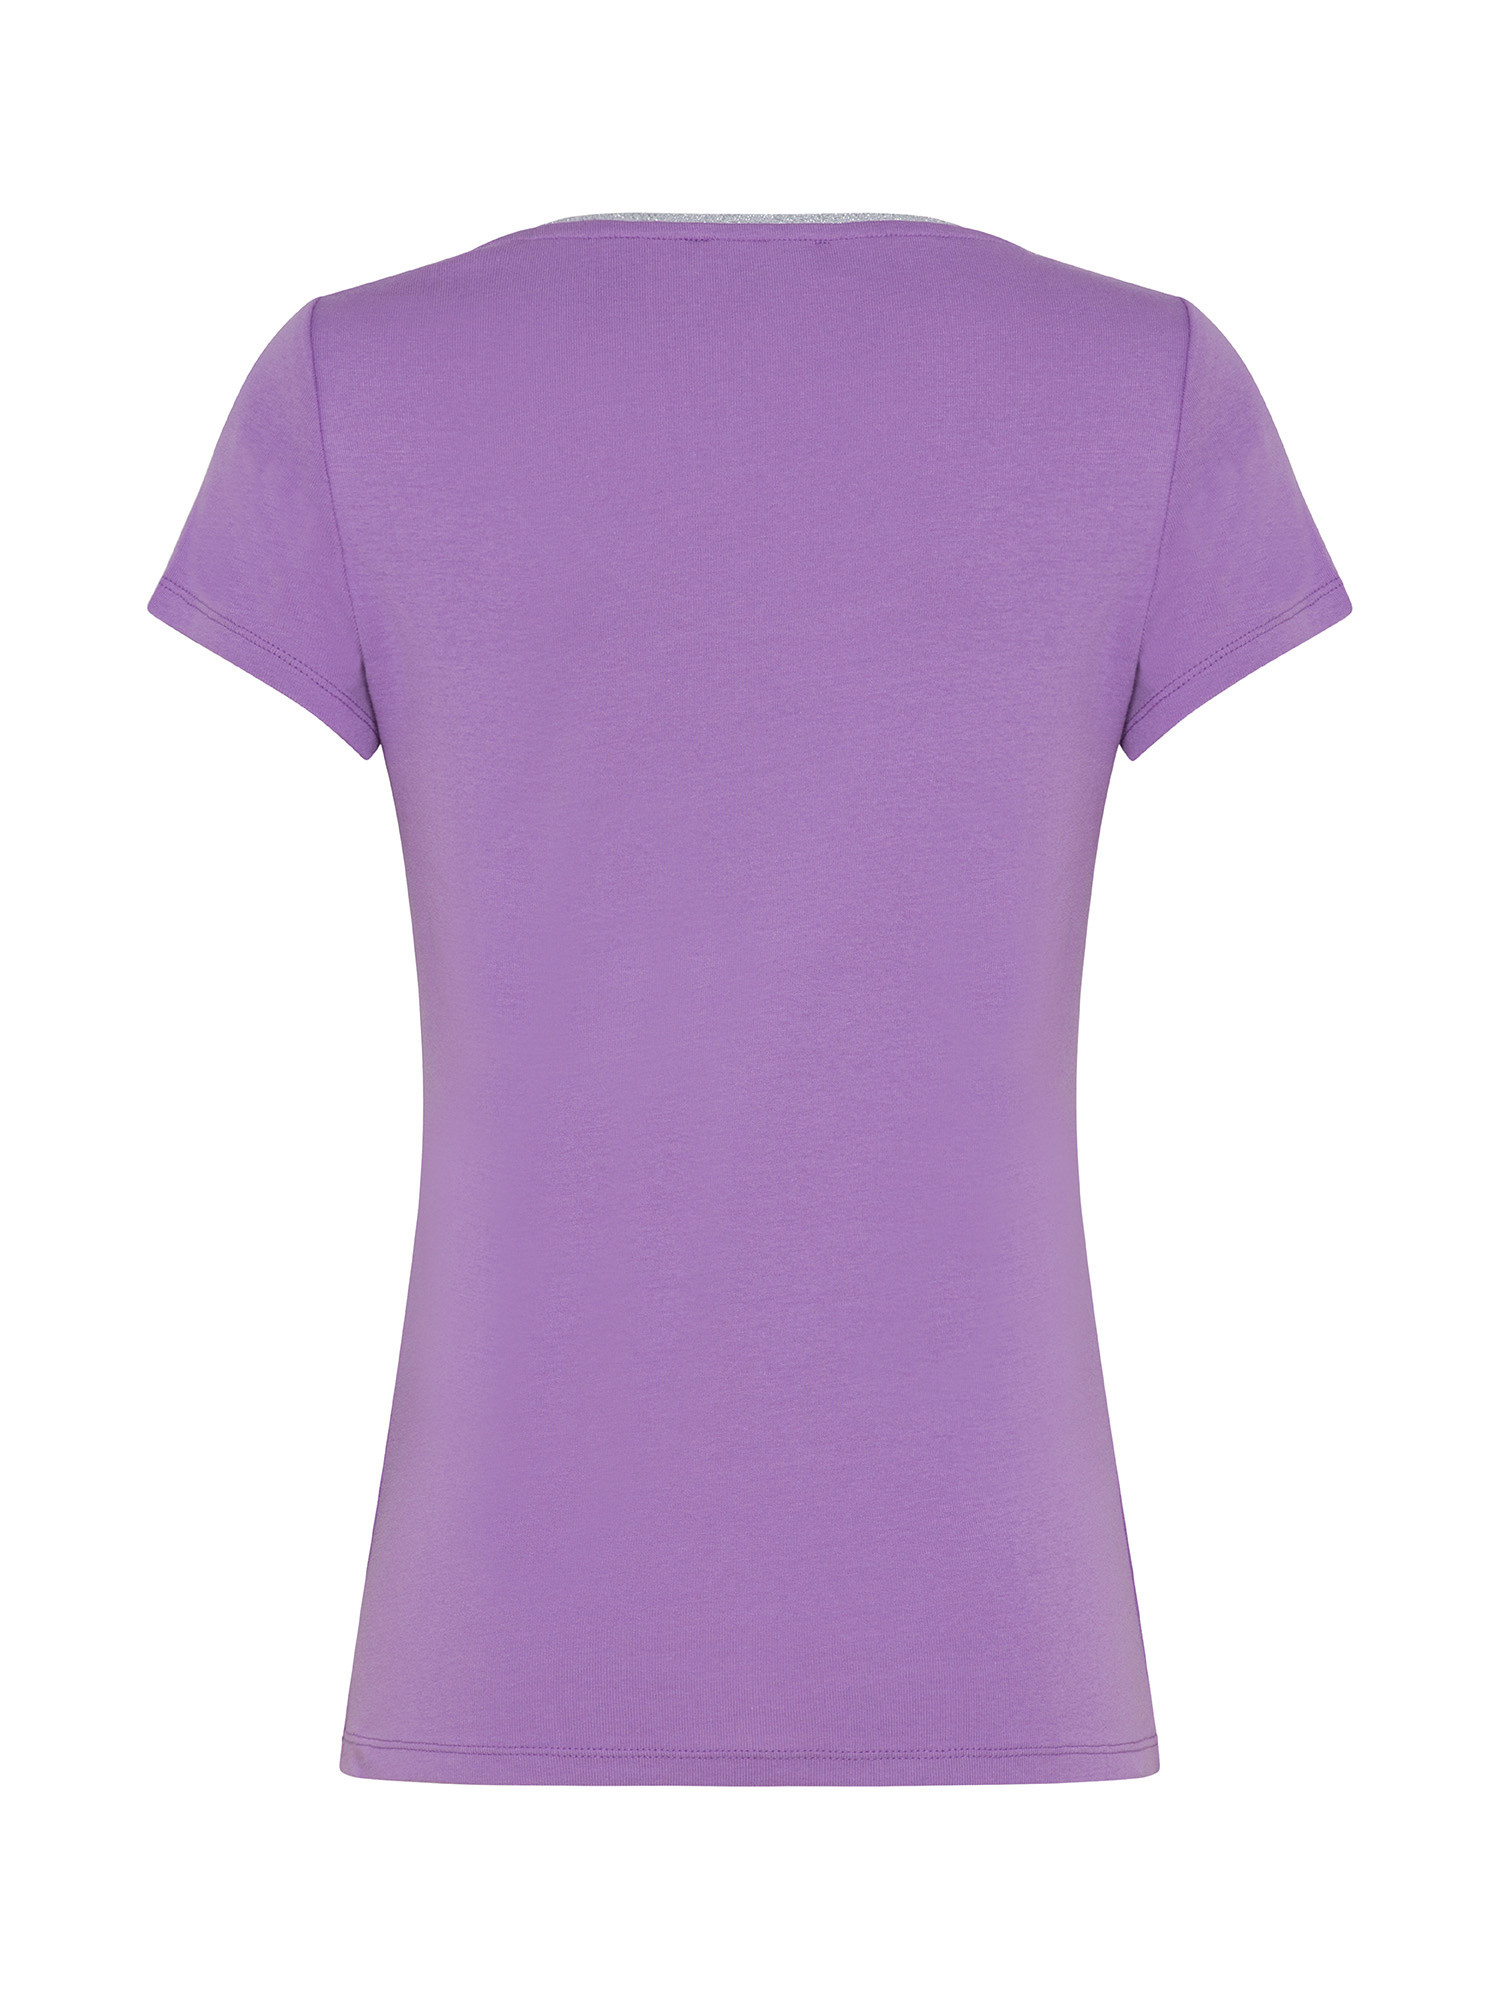 Koan - Cotton T-shirt with lurex, Purple Lilac, large image number 1